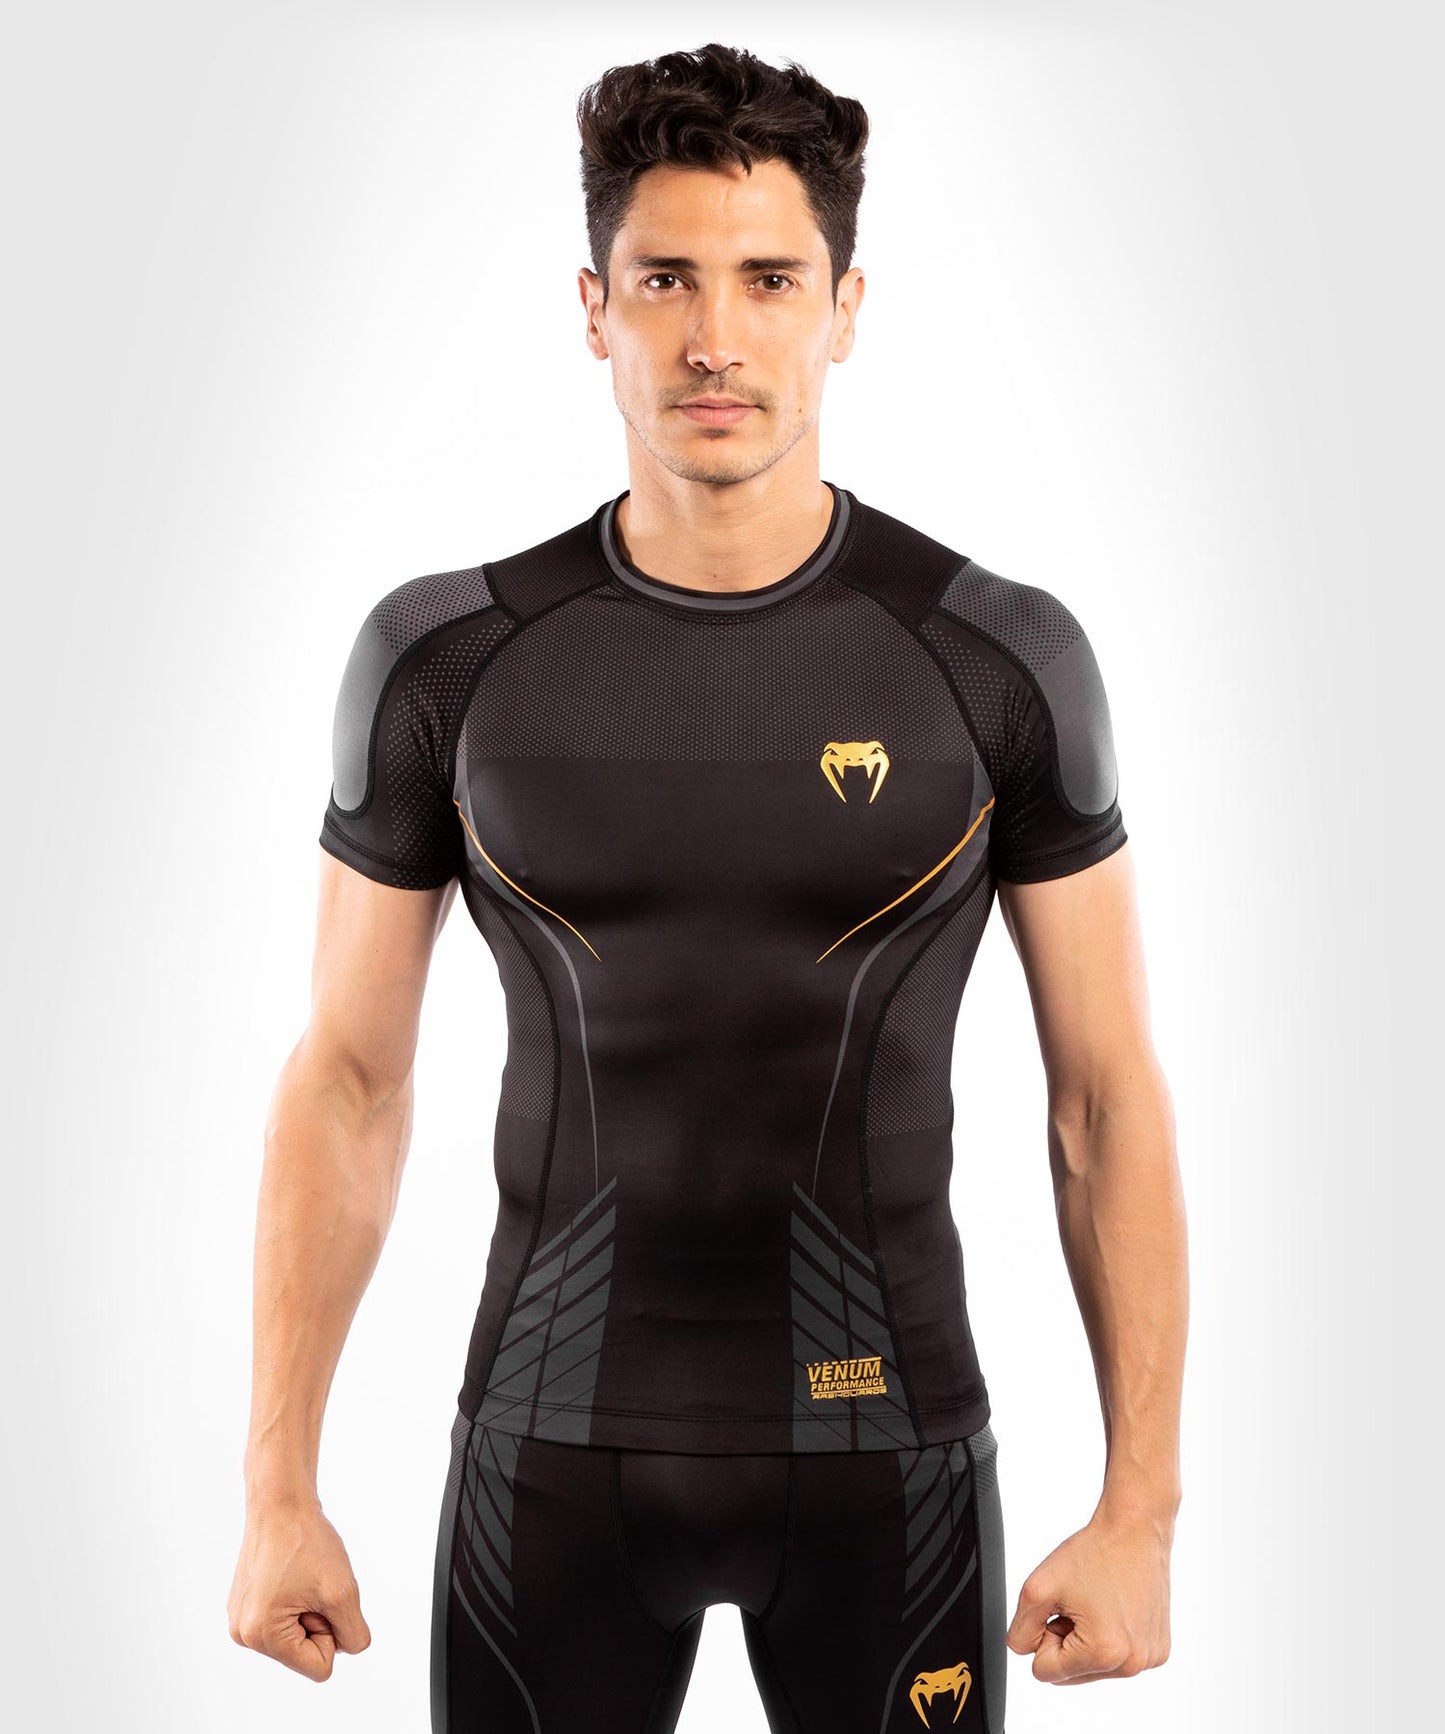 Venum Athletics Rashguard Short Sleeves – Black/Gold